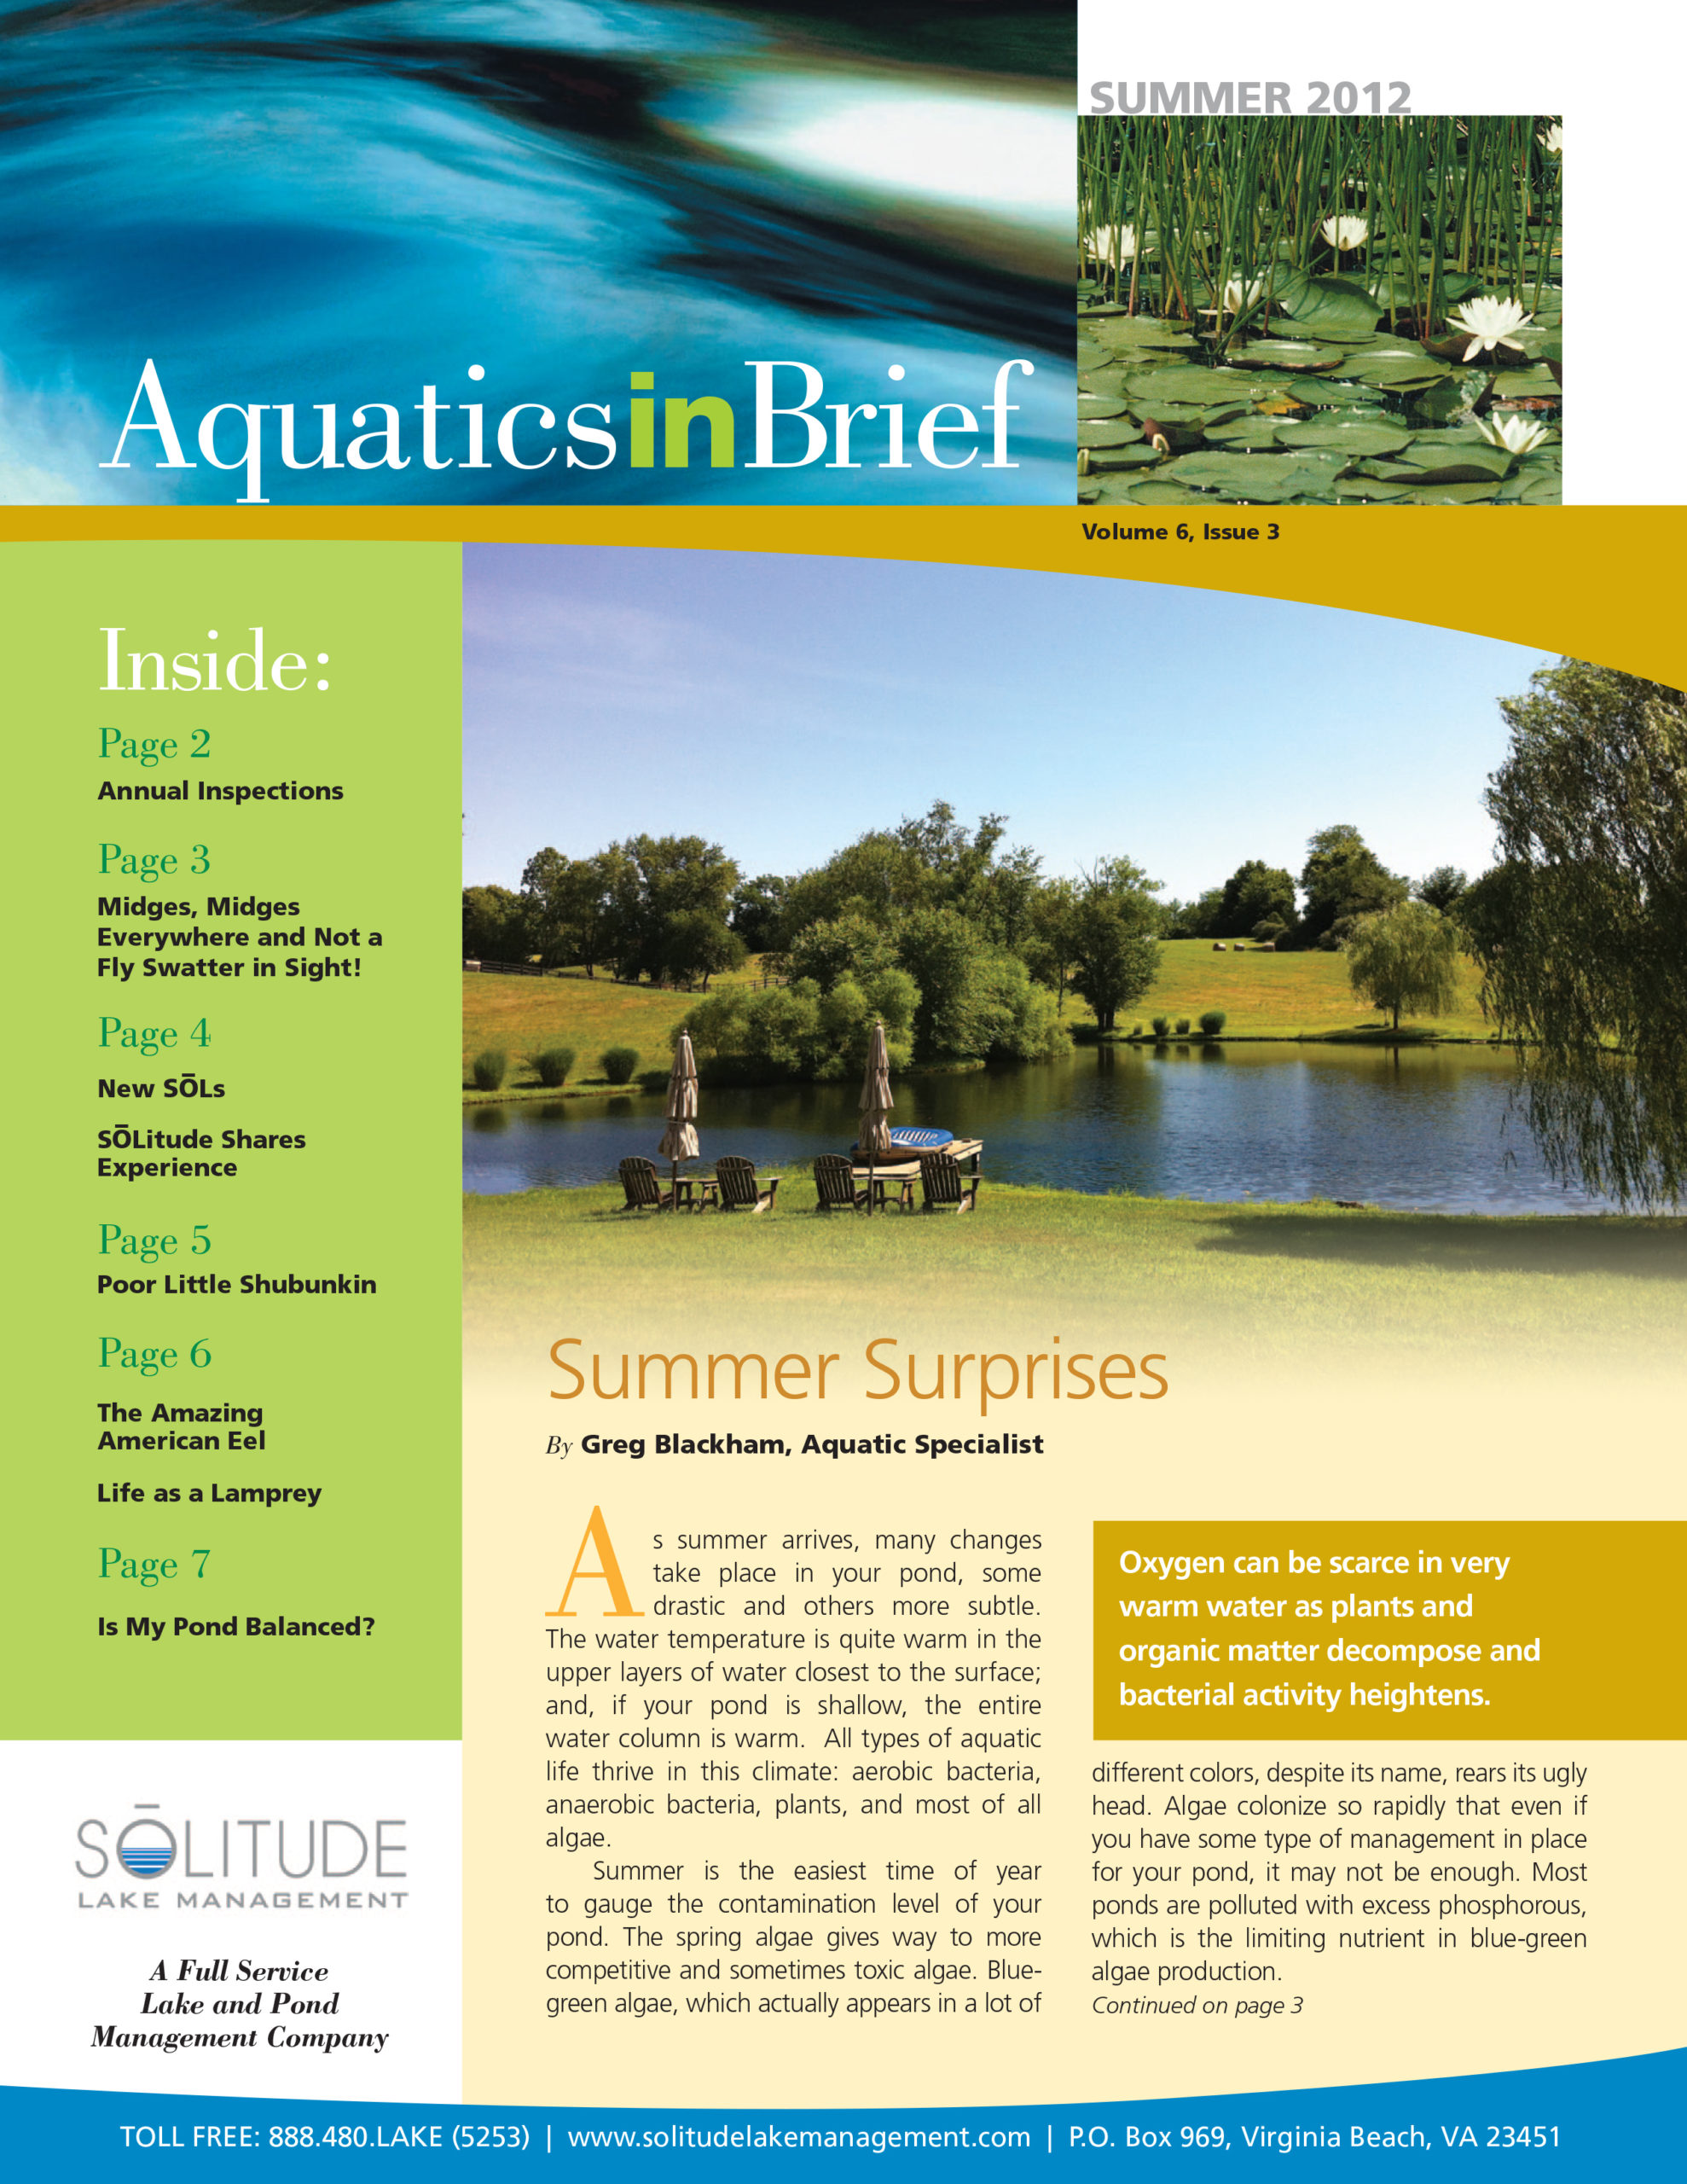 32_SOLitude_lake_management_AquaticsInBrief_newsletter_07.2012_Summer_cover